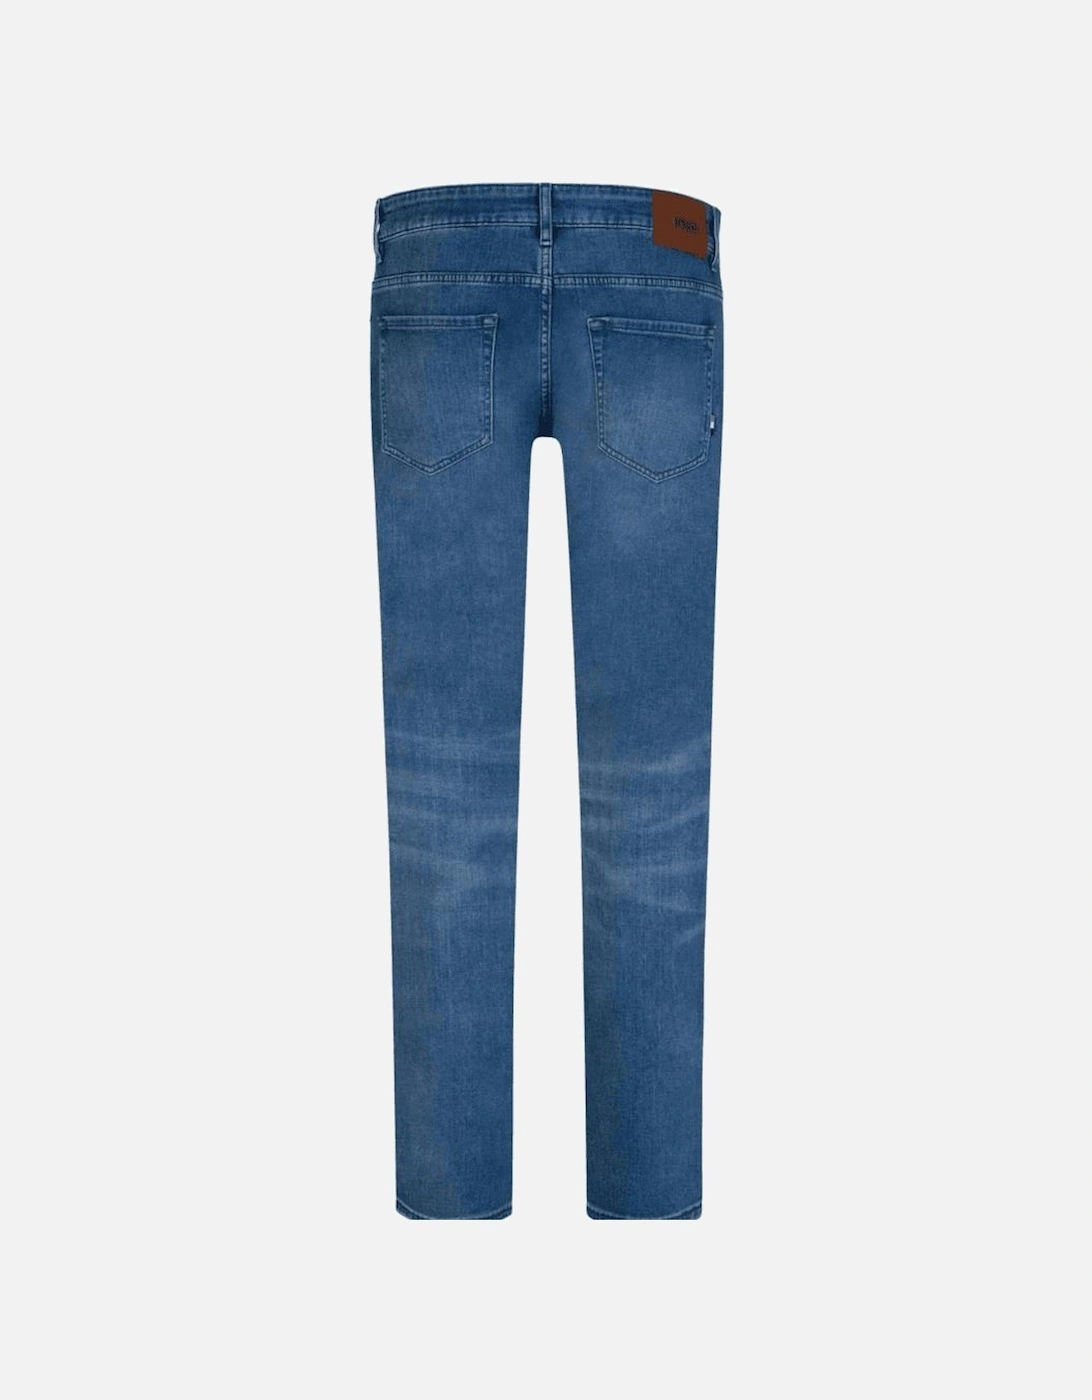 Delaware3-1 Cotton Slim Fit Light Wash Blue Jeans